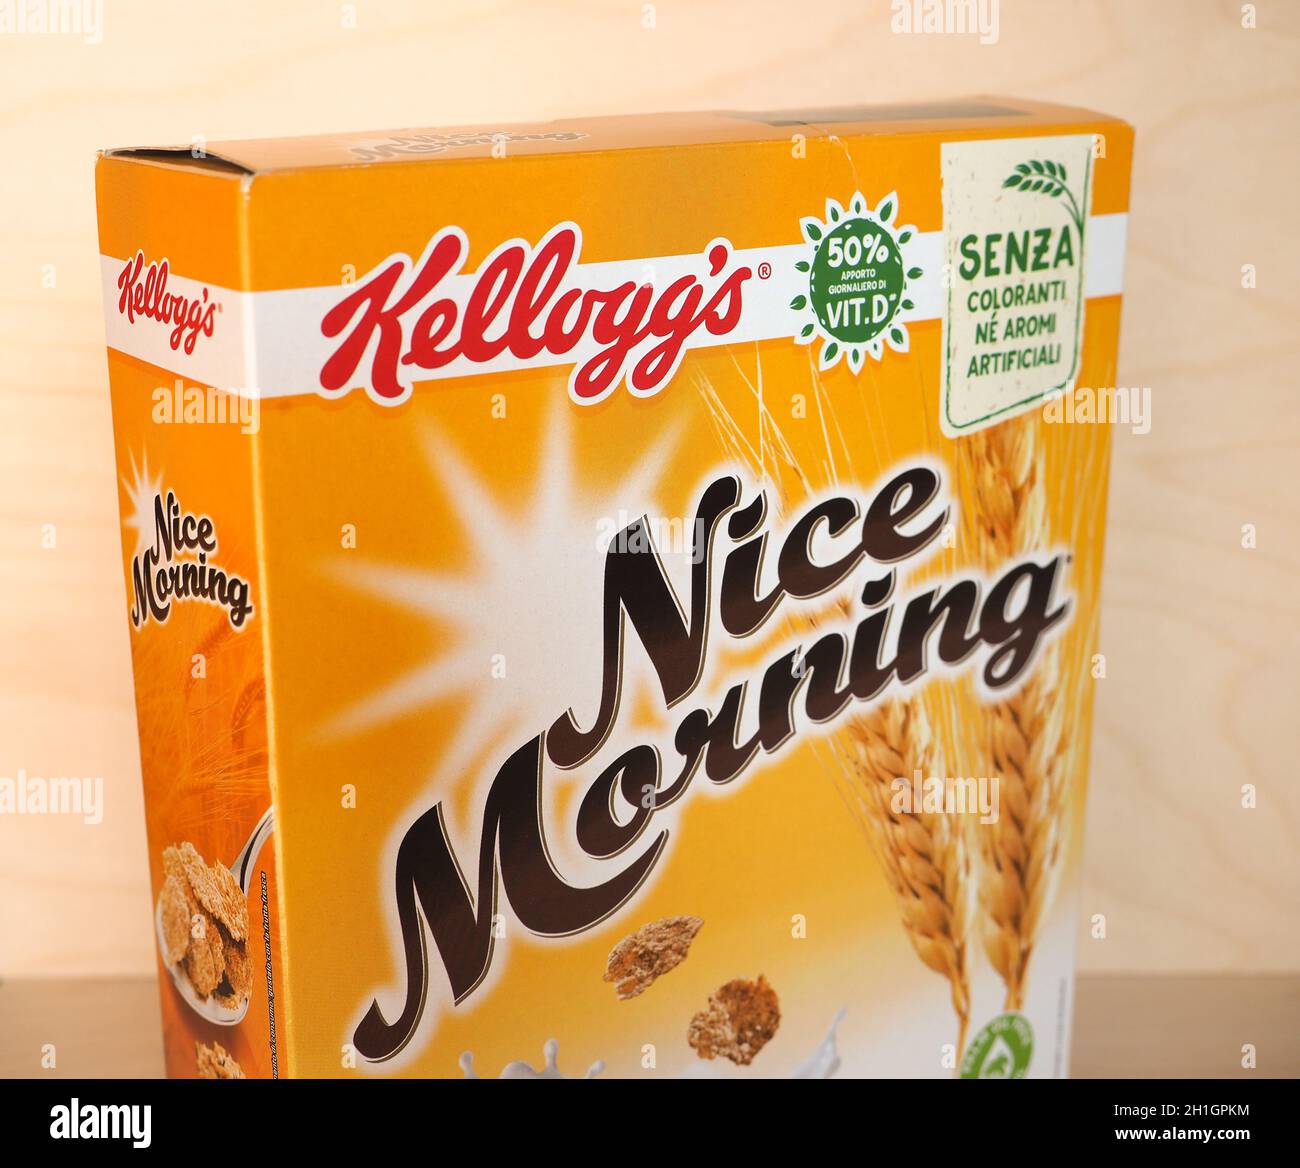 BATTLE CREEK, USA - CIRCA JULY 2020: Box of Kellogg's Nice Morning cereals Stock Photo